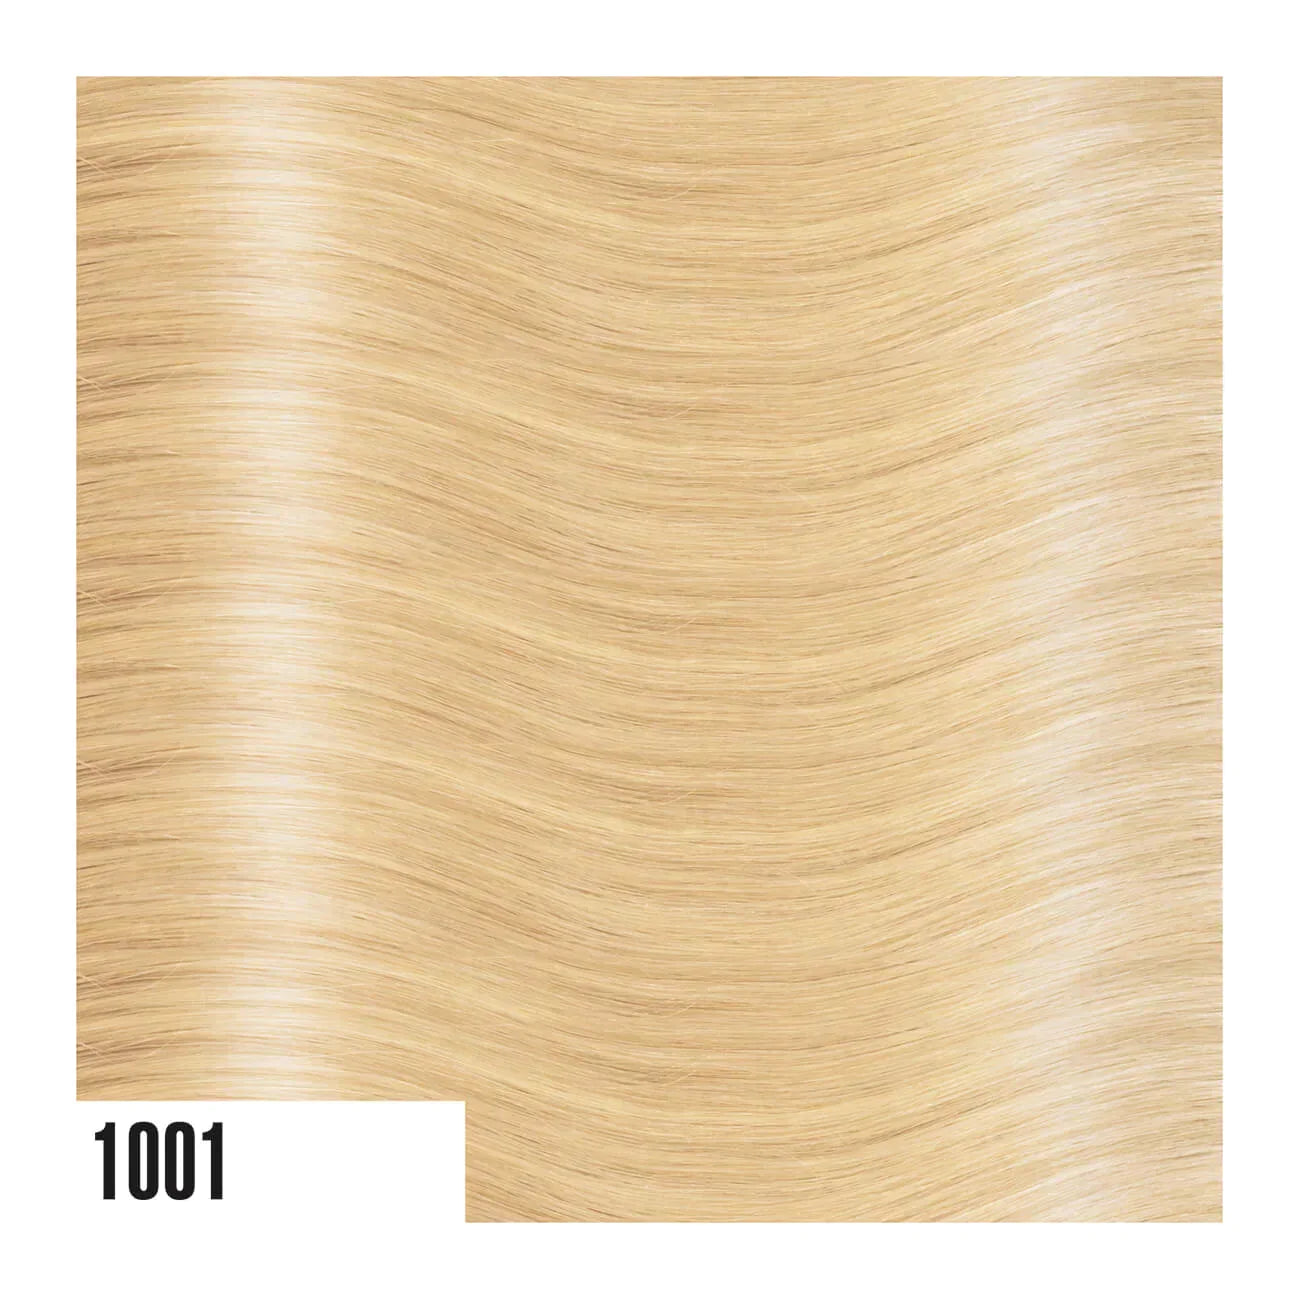 Hair extension in Clip di capelli lisci (40cm/45cm)